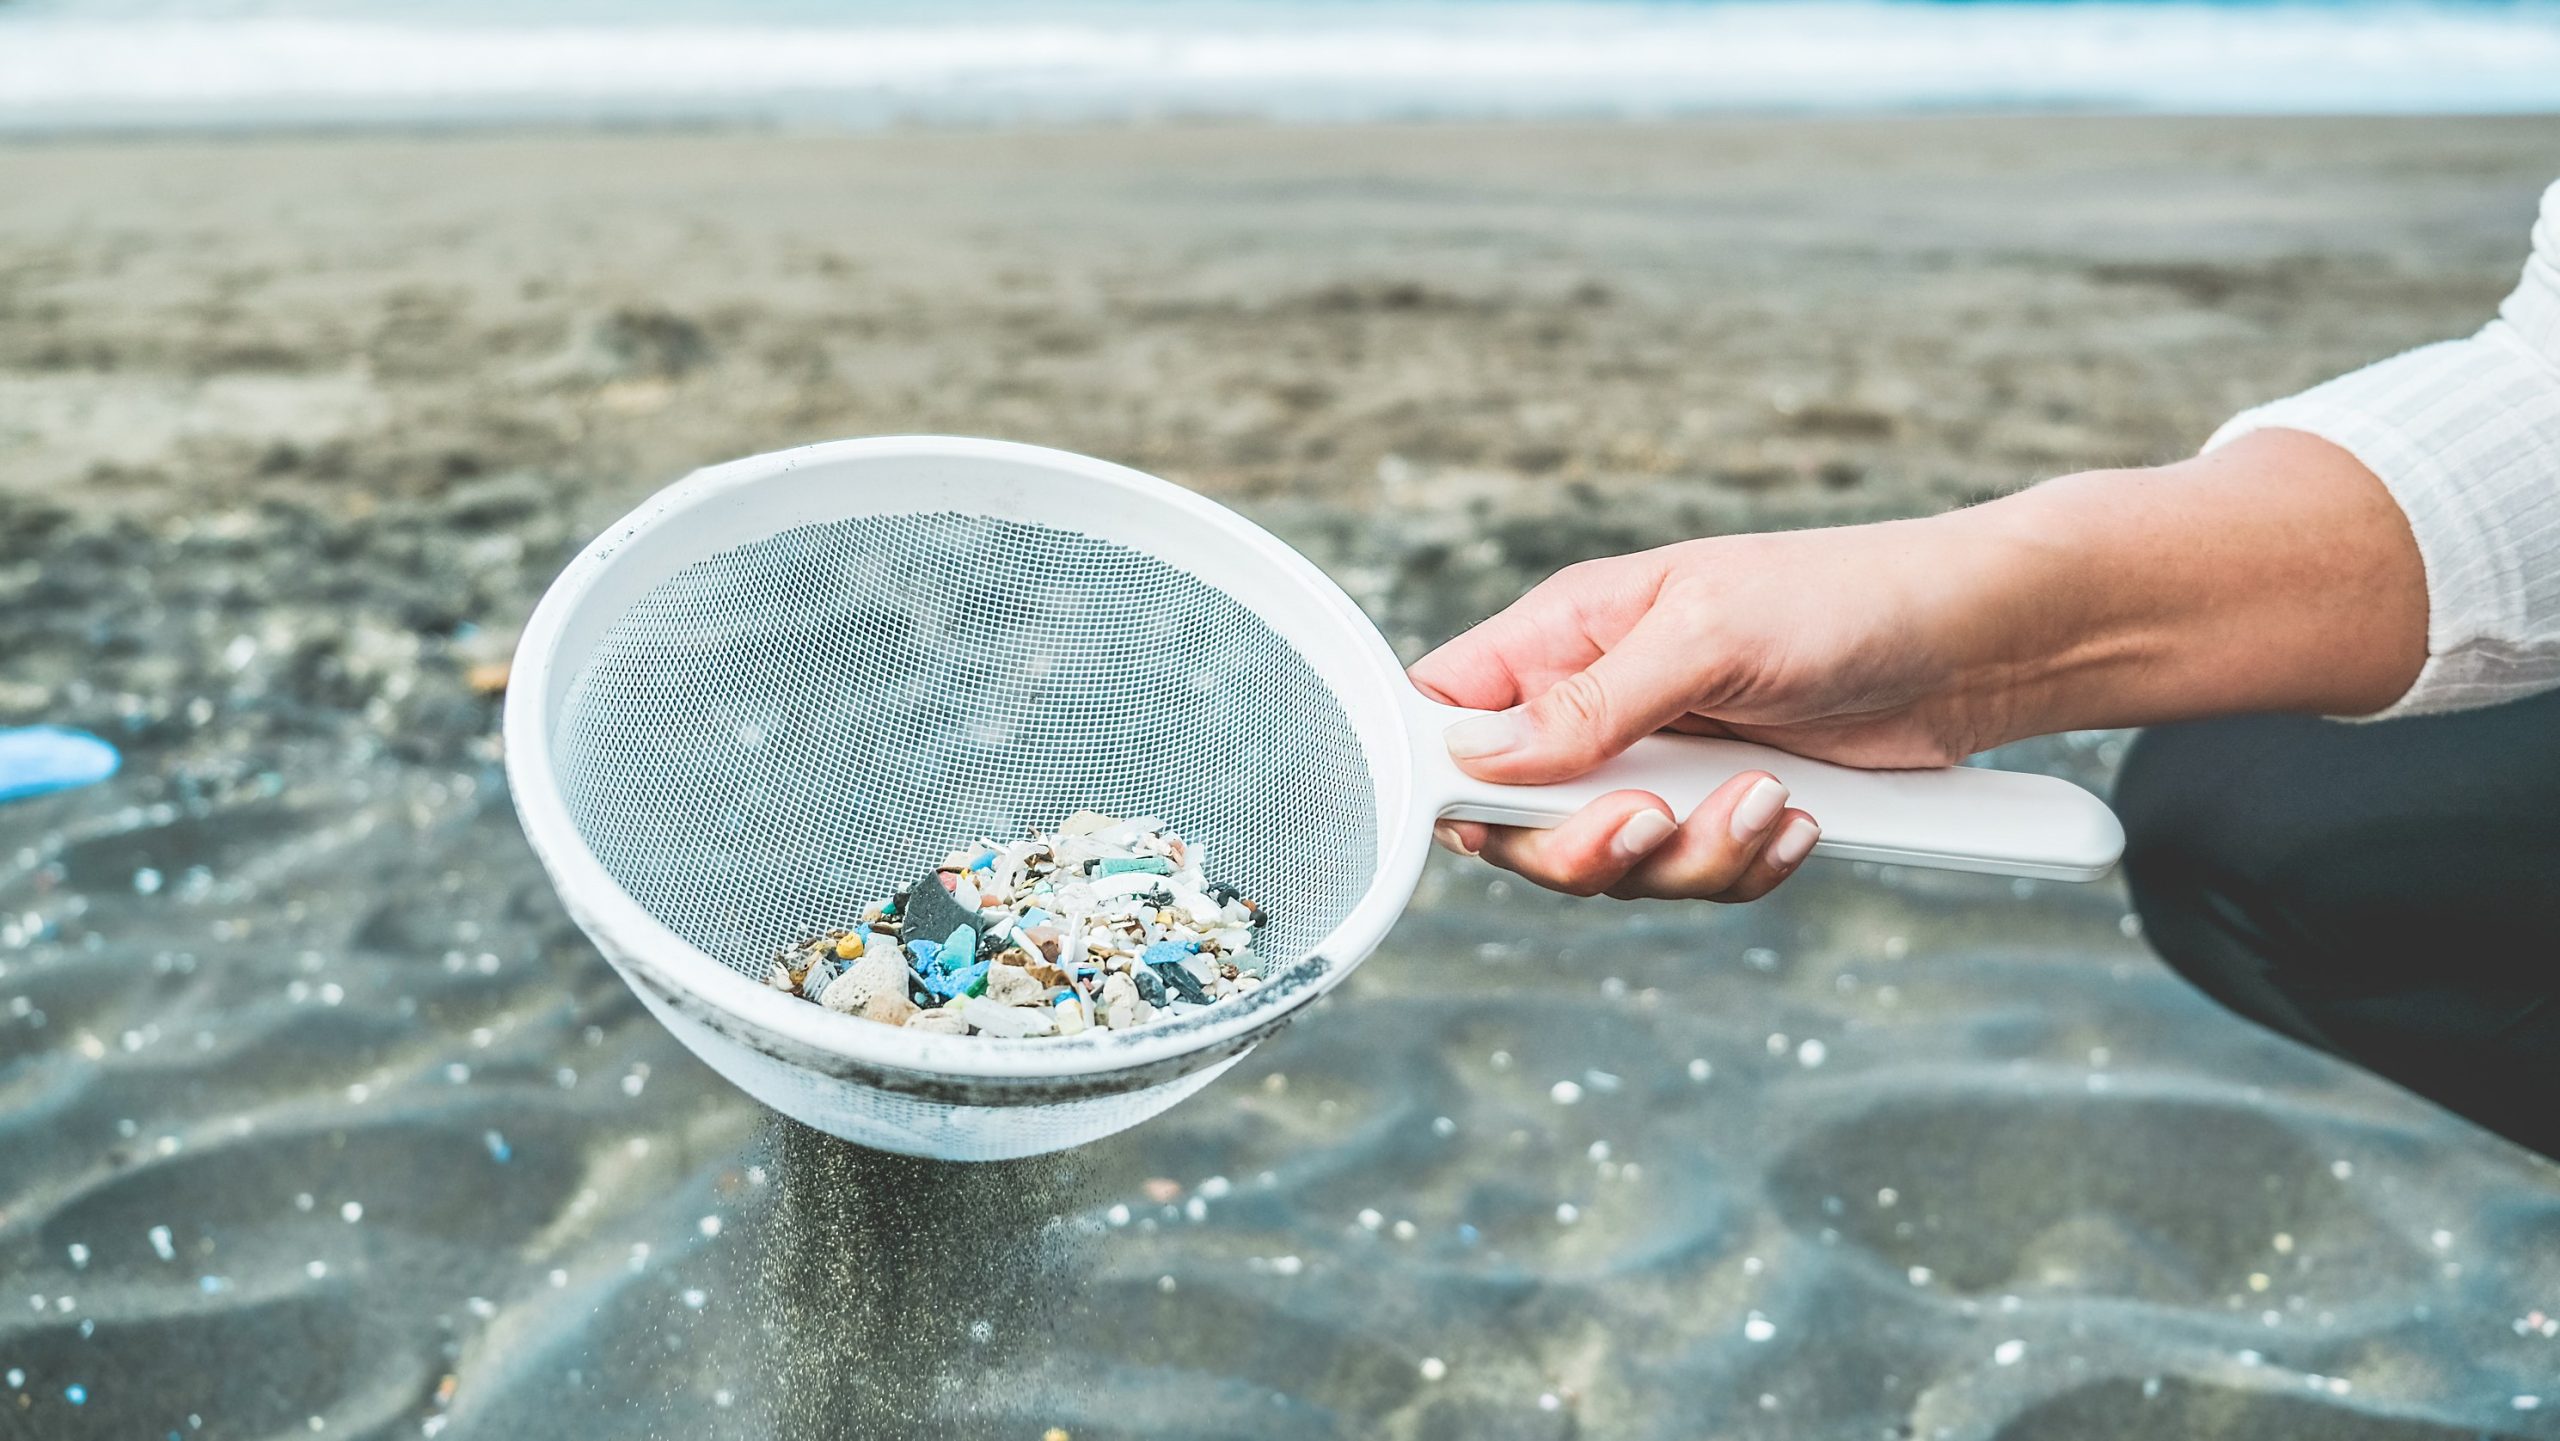 microplastics found in the ocean